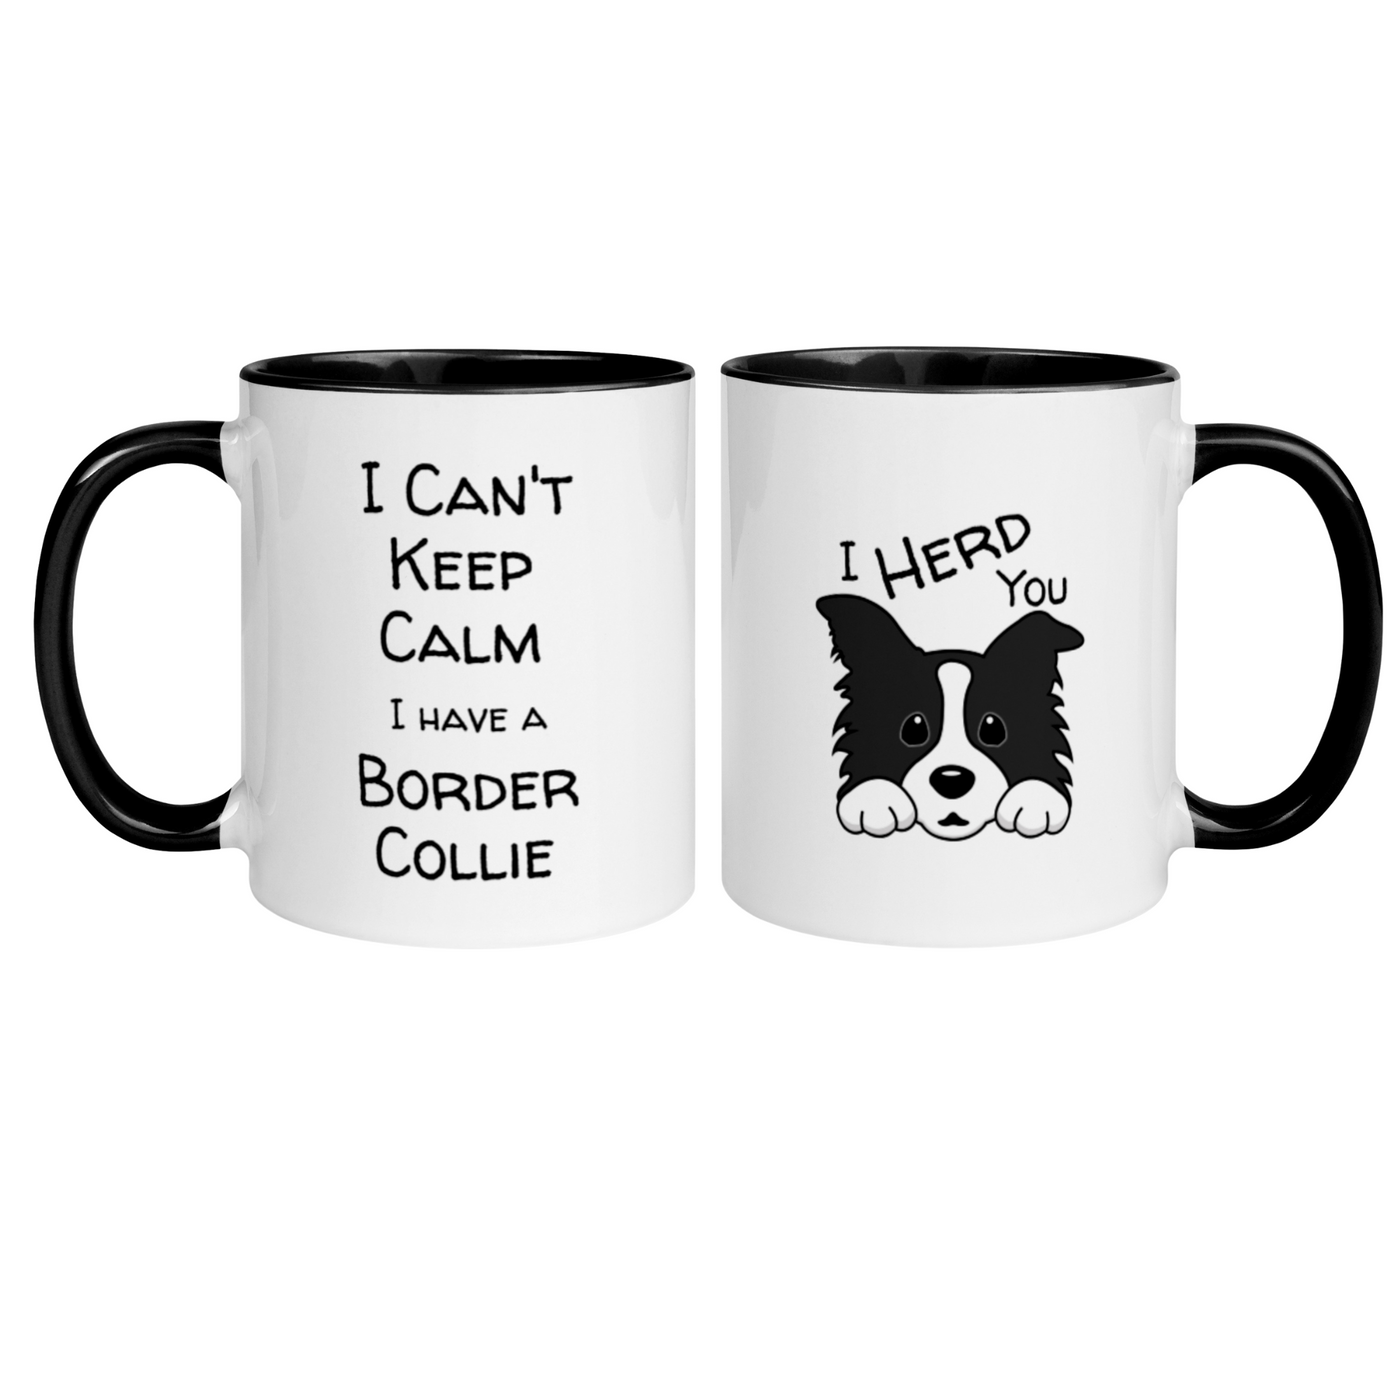 I cant keep calm I have a border collie mug | Border collie mug | I herd you border collie